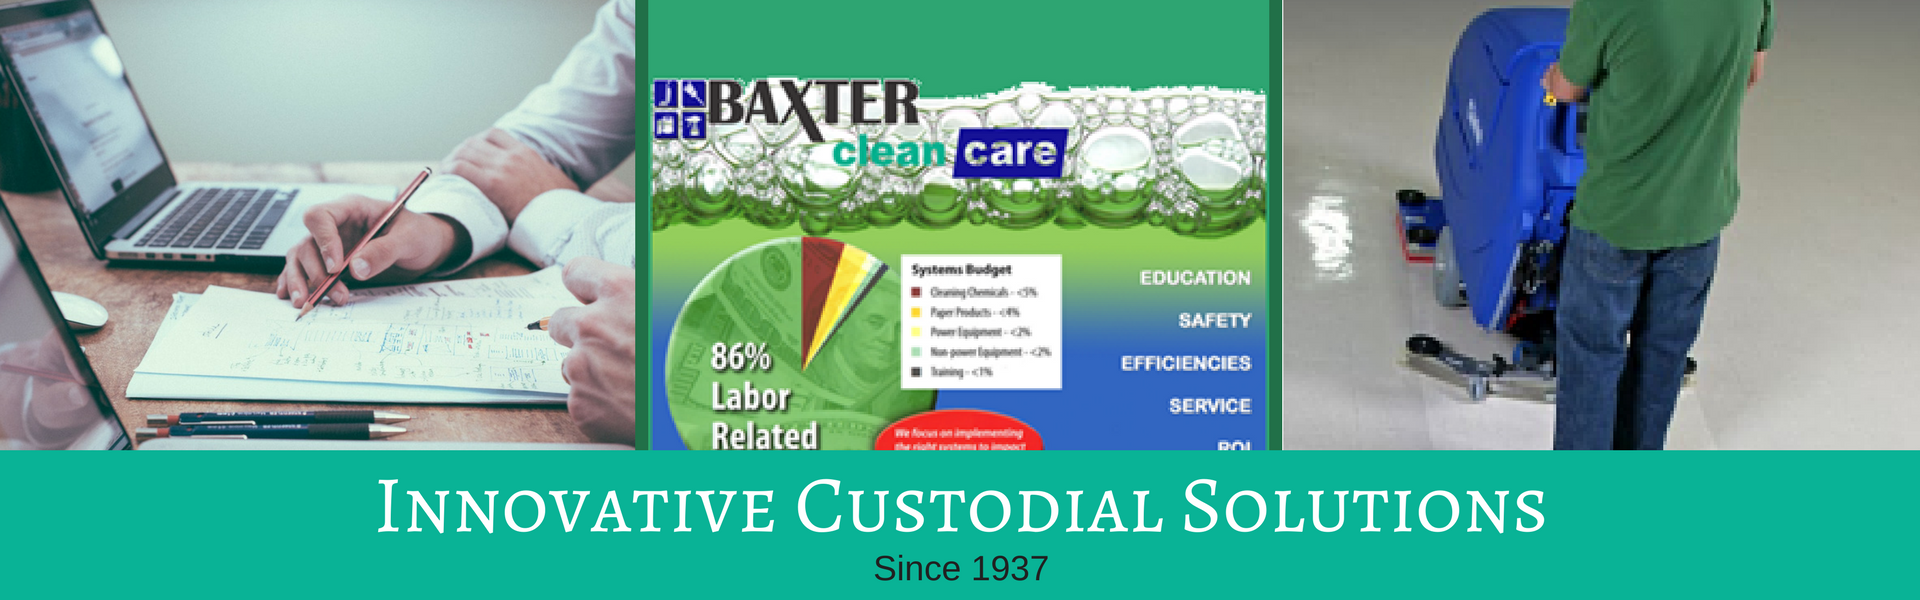 baxter clean care